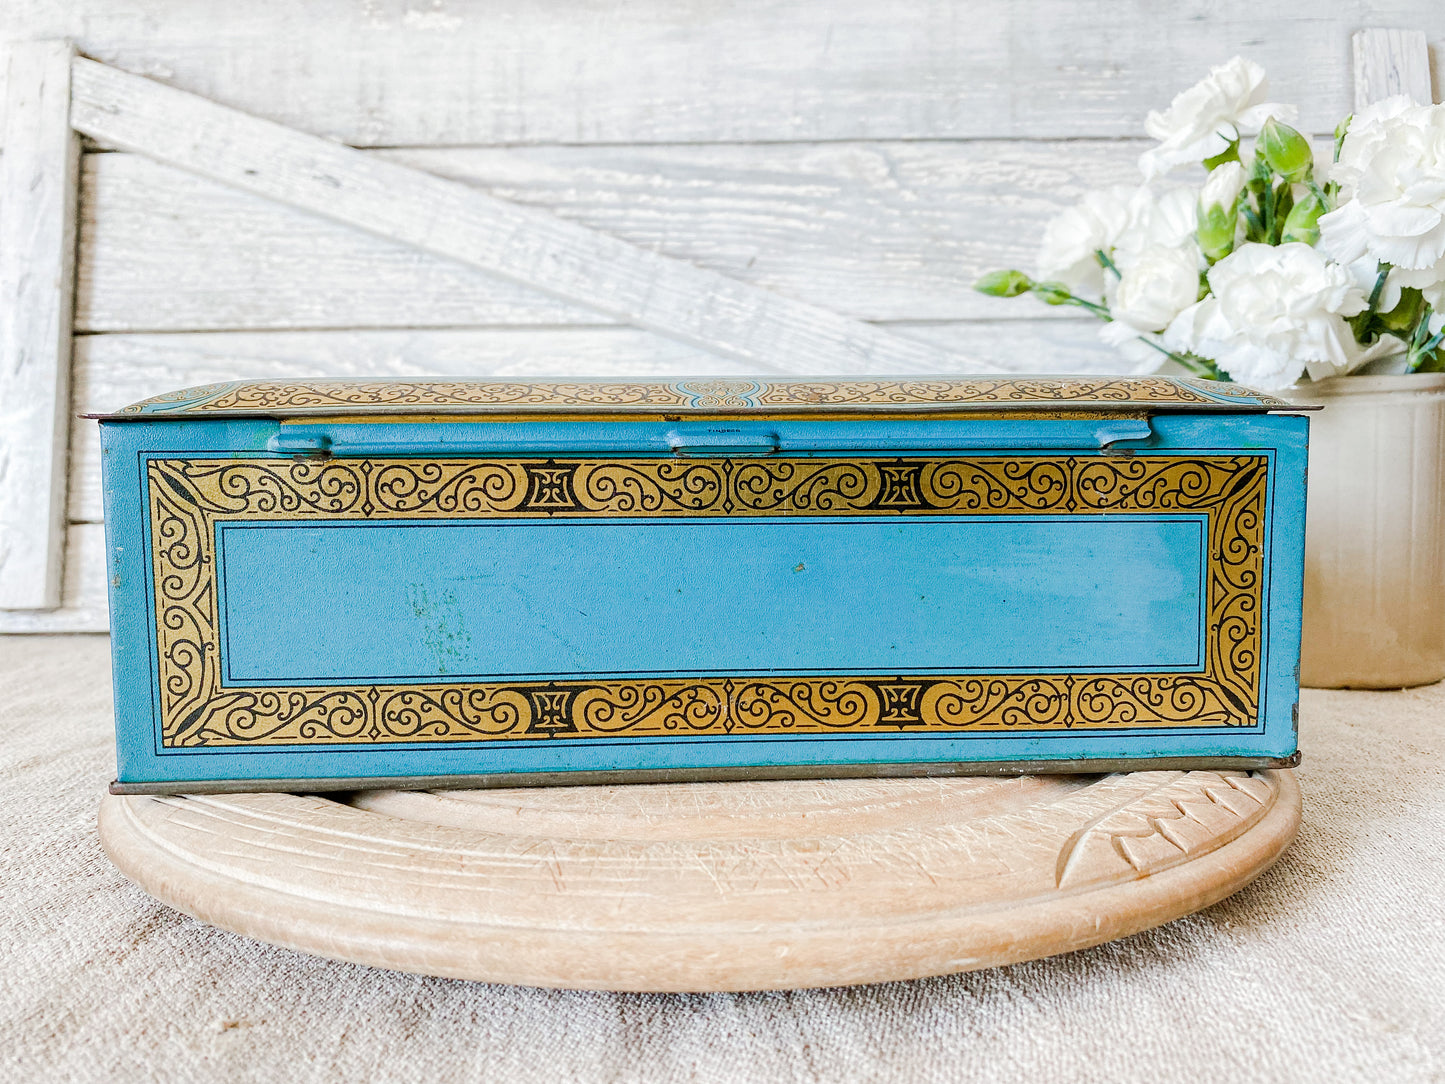 Vintage Blue and Gold Johnston's Chocolate Box, Metal Tin